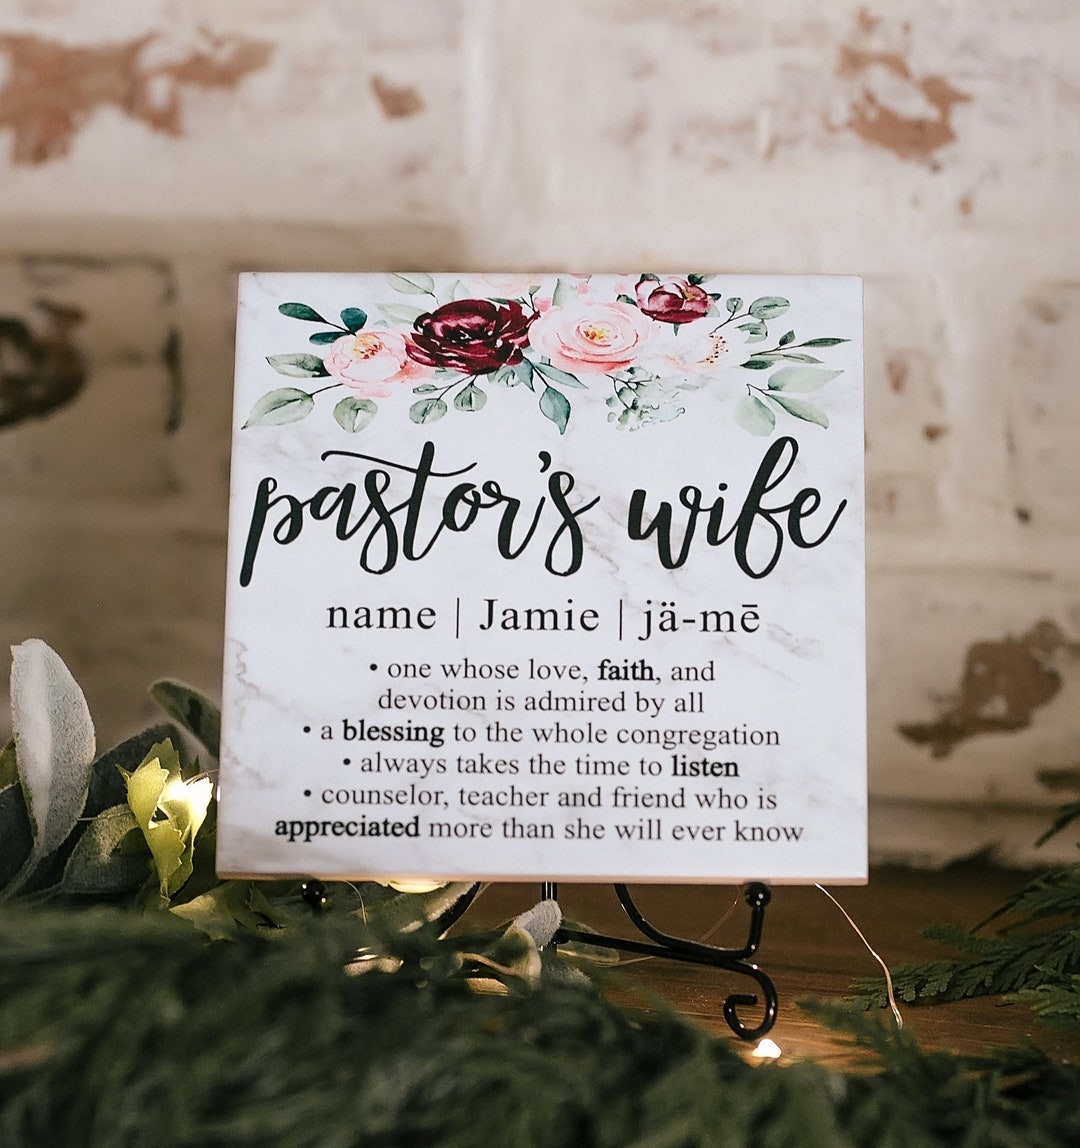 sex confessions of pastors wives